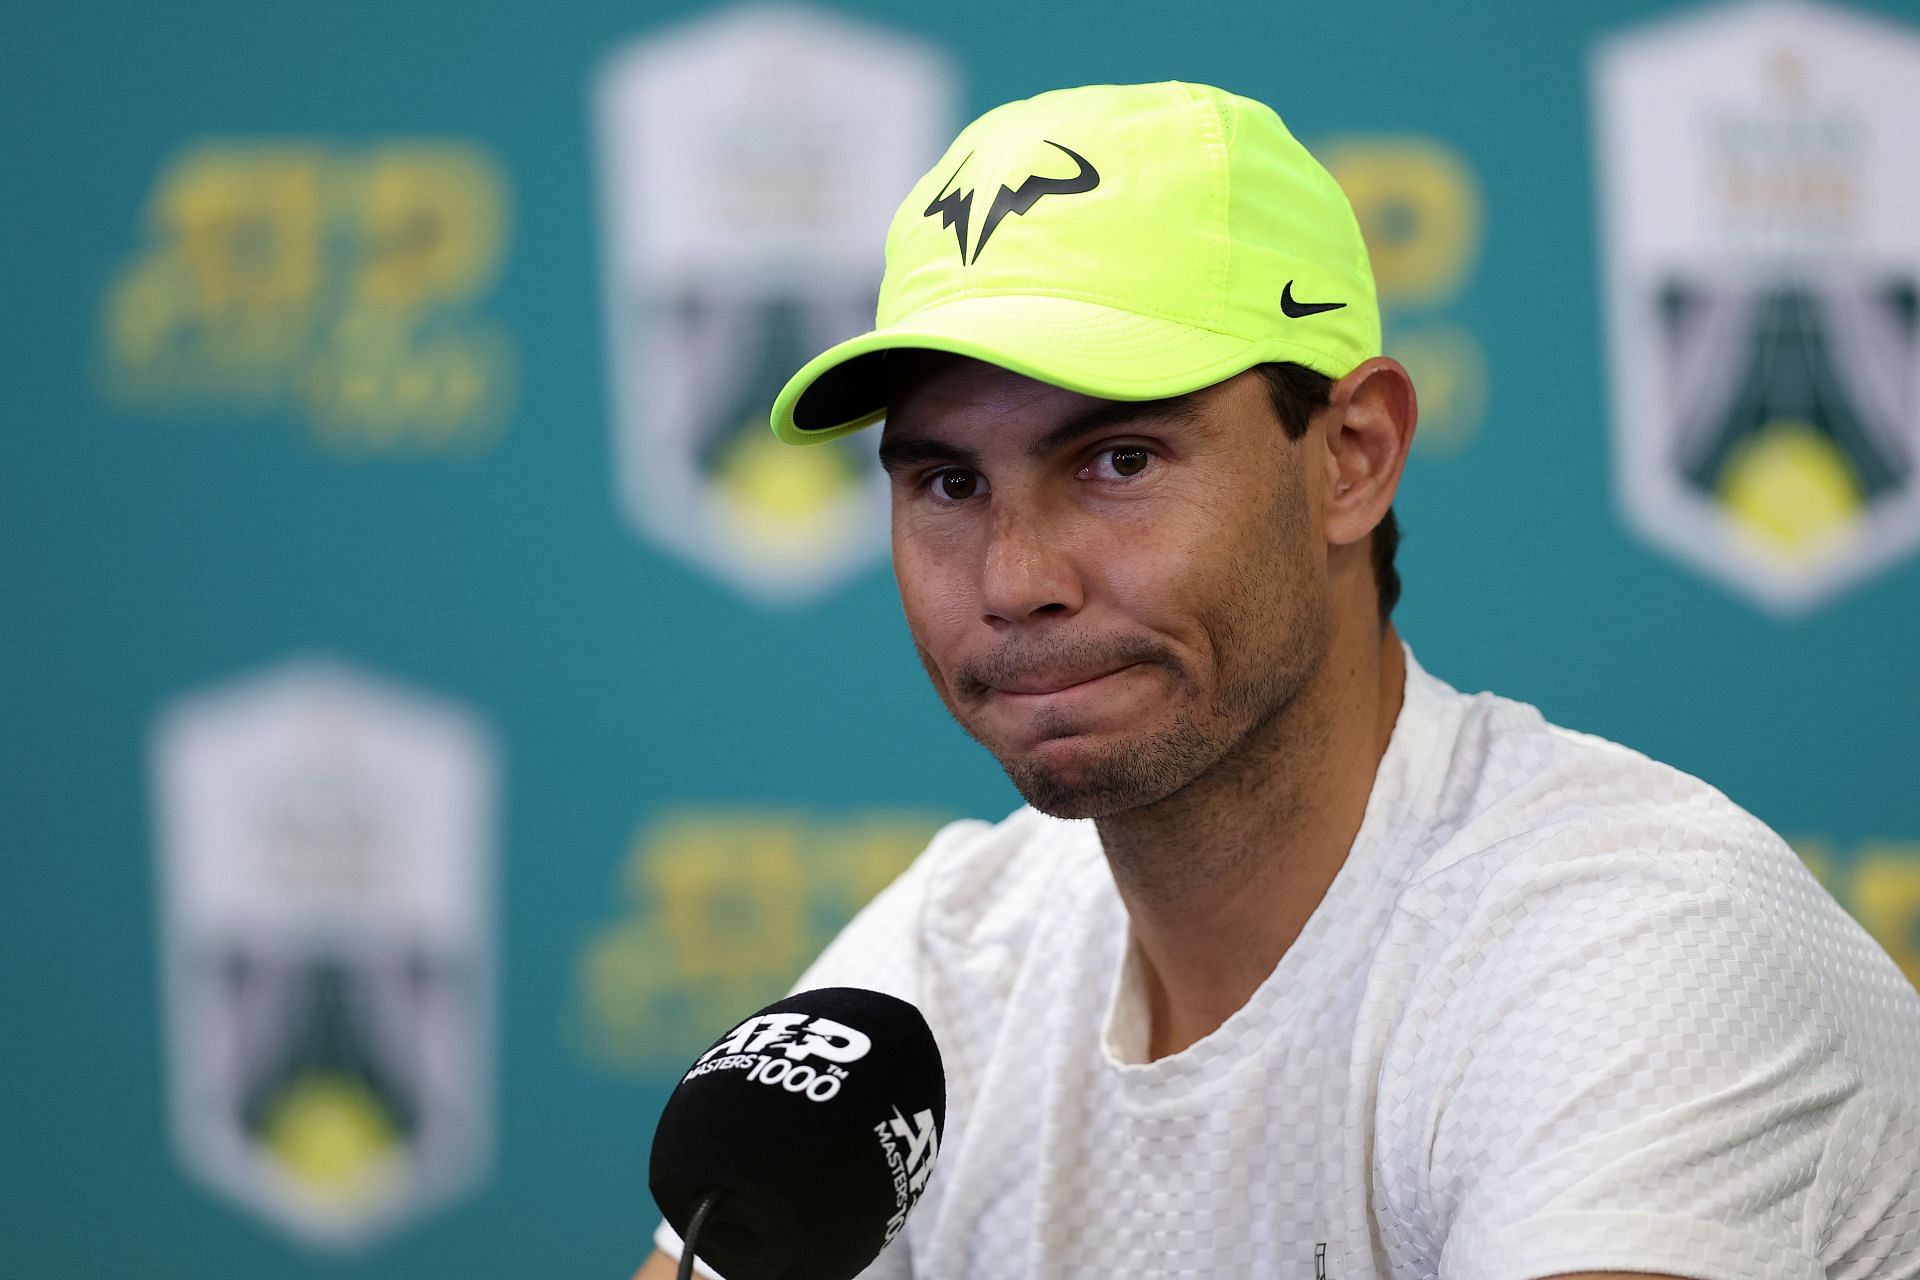 Rafael Nadal has spent 209 weeks as World No. 1